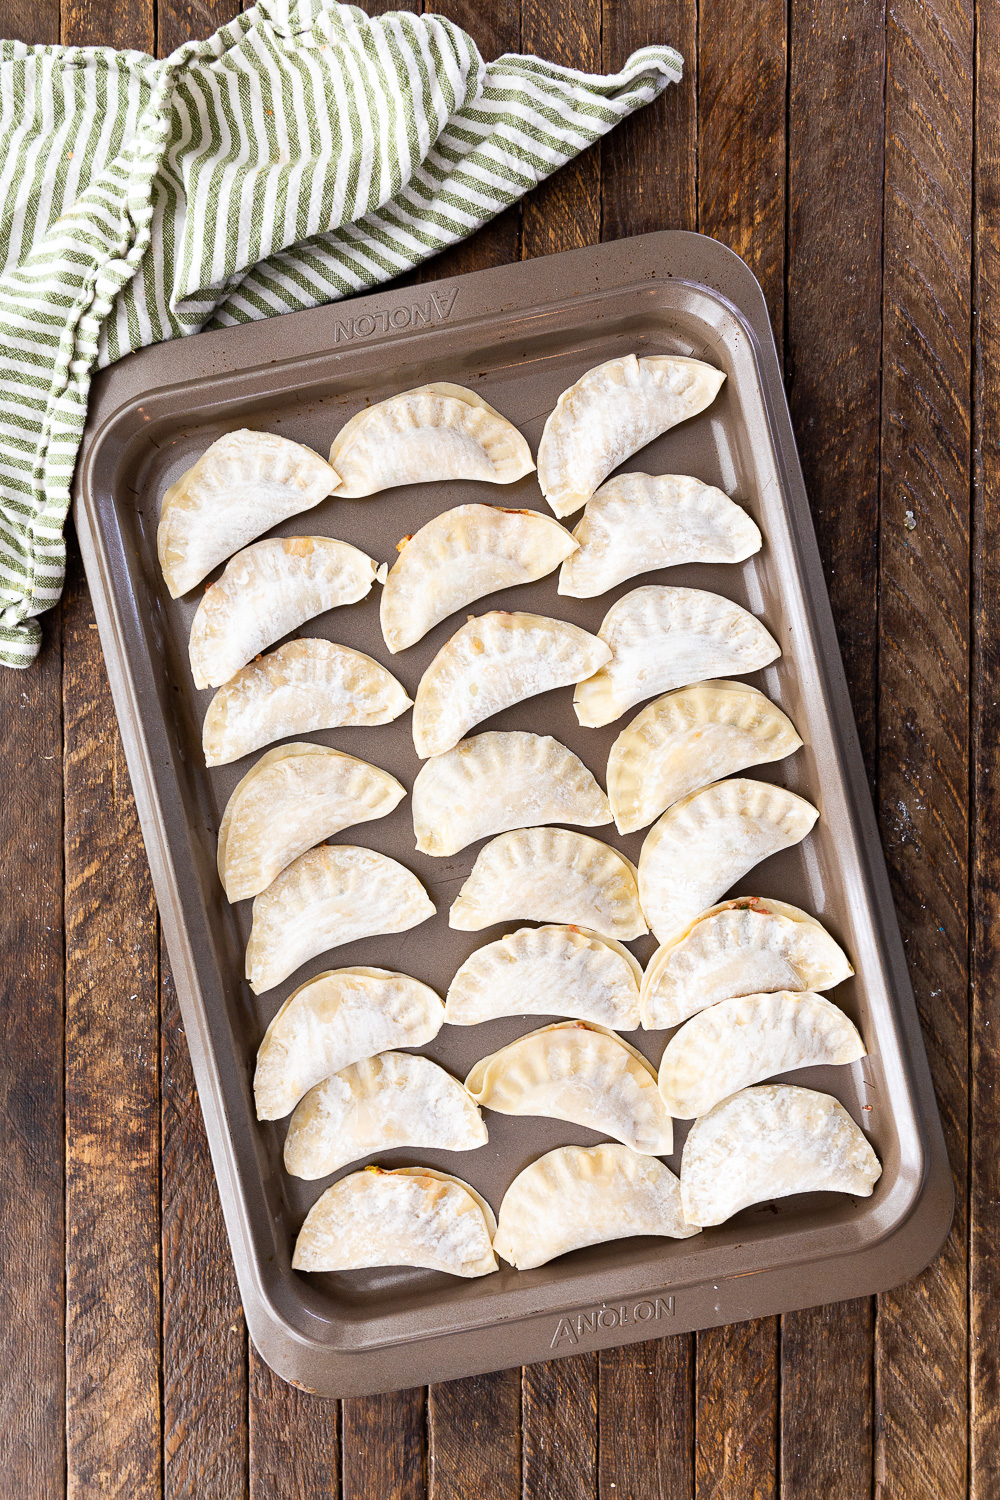 A pan of frozen dumplings, pork dumplings prepped and frozen for future use. 